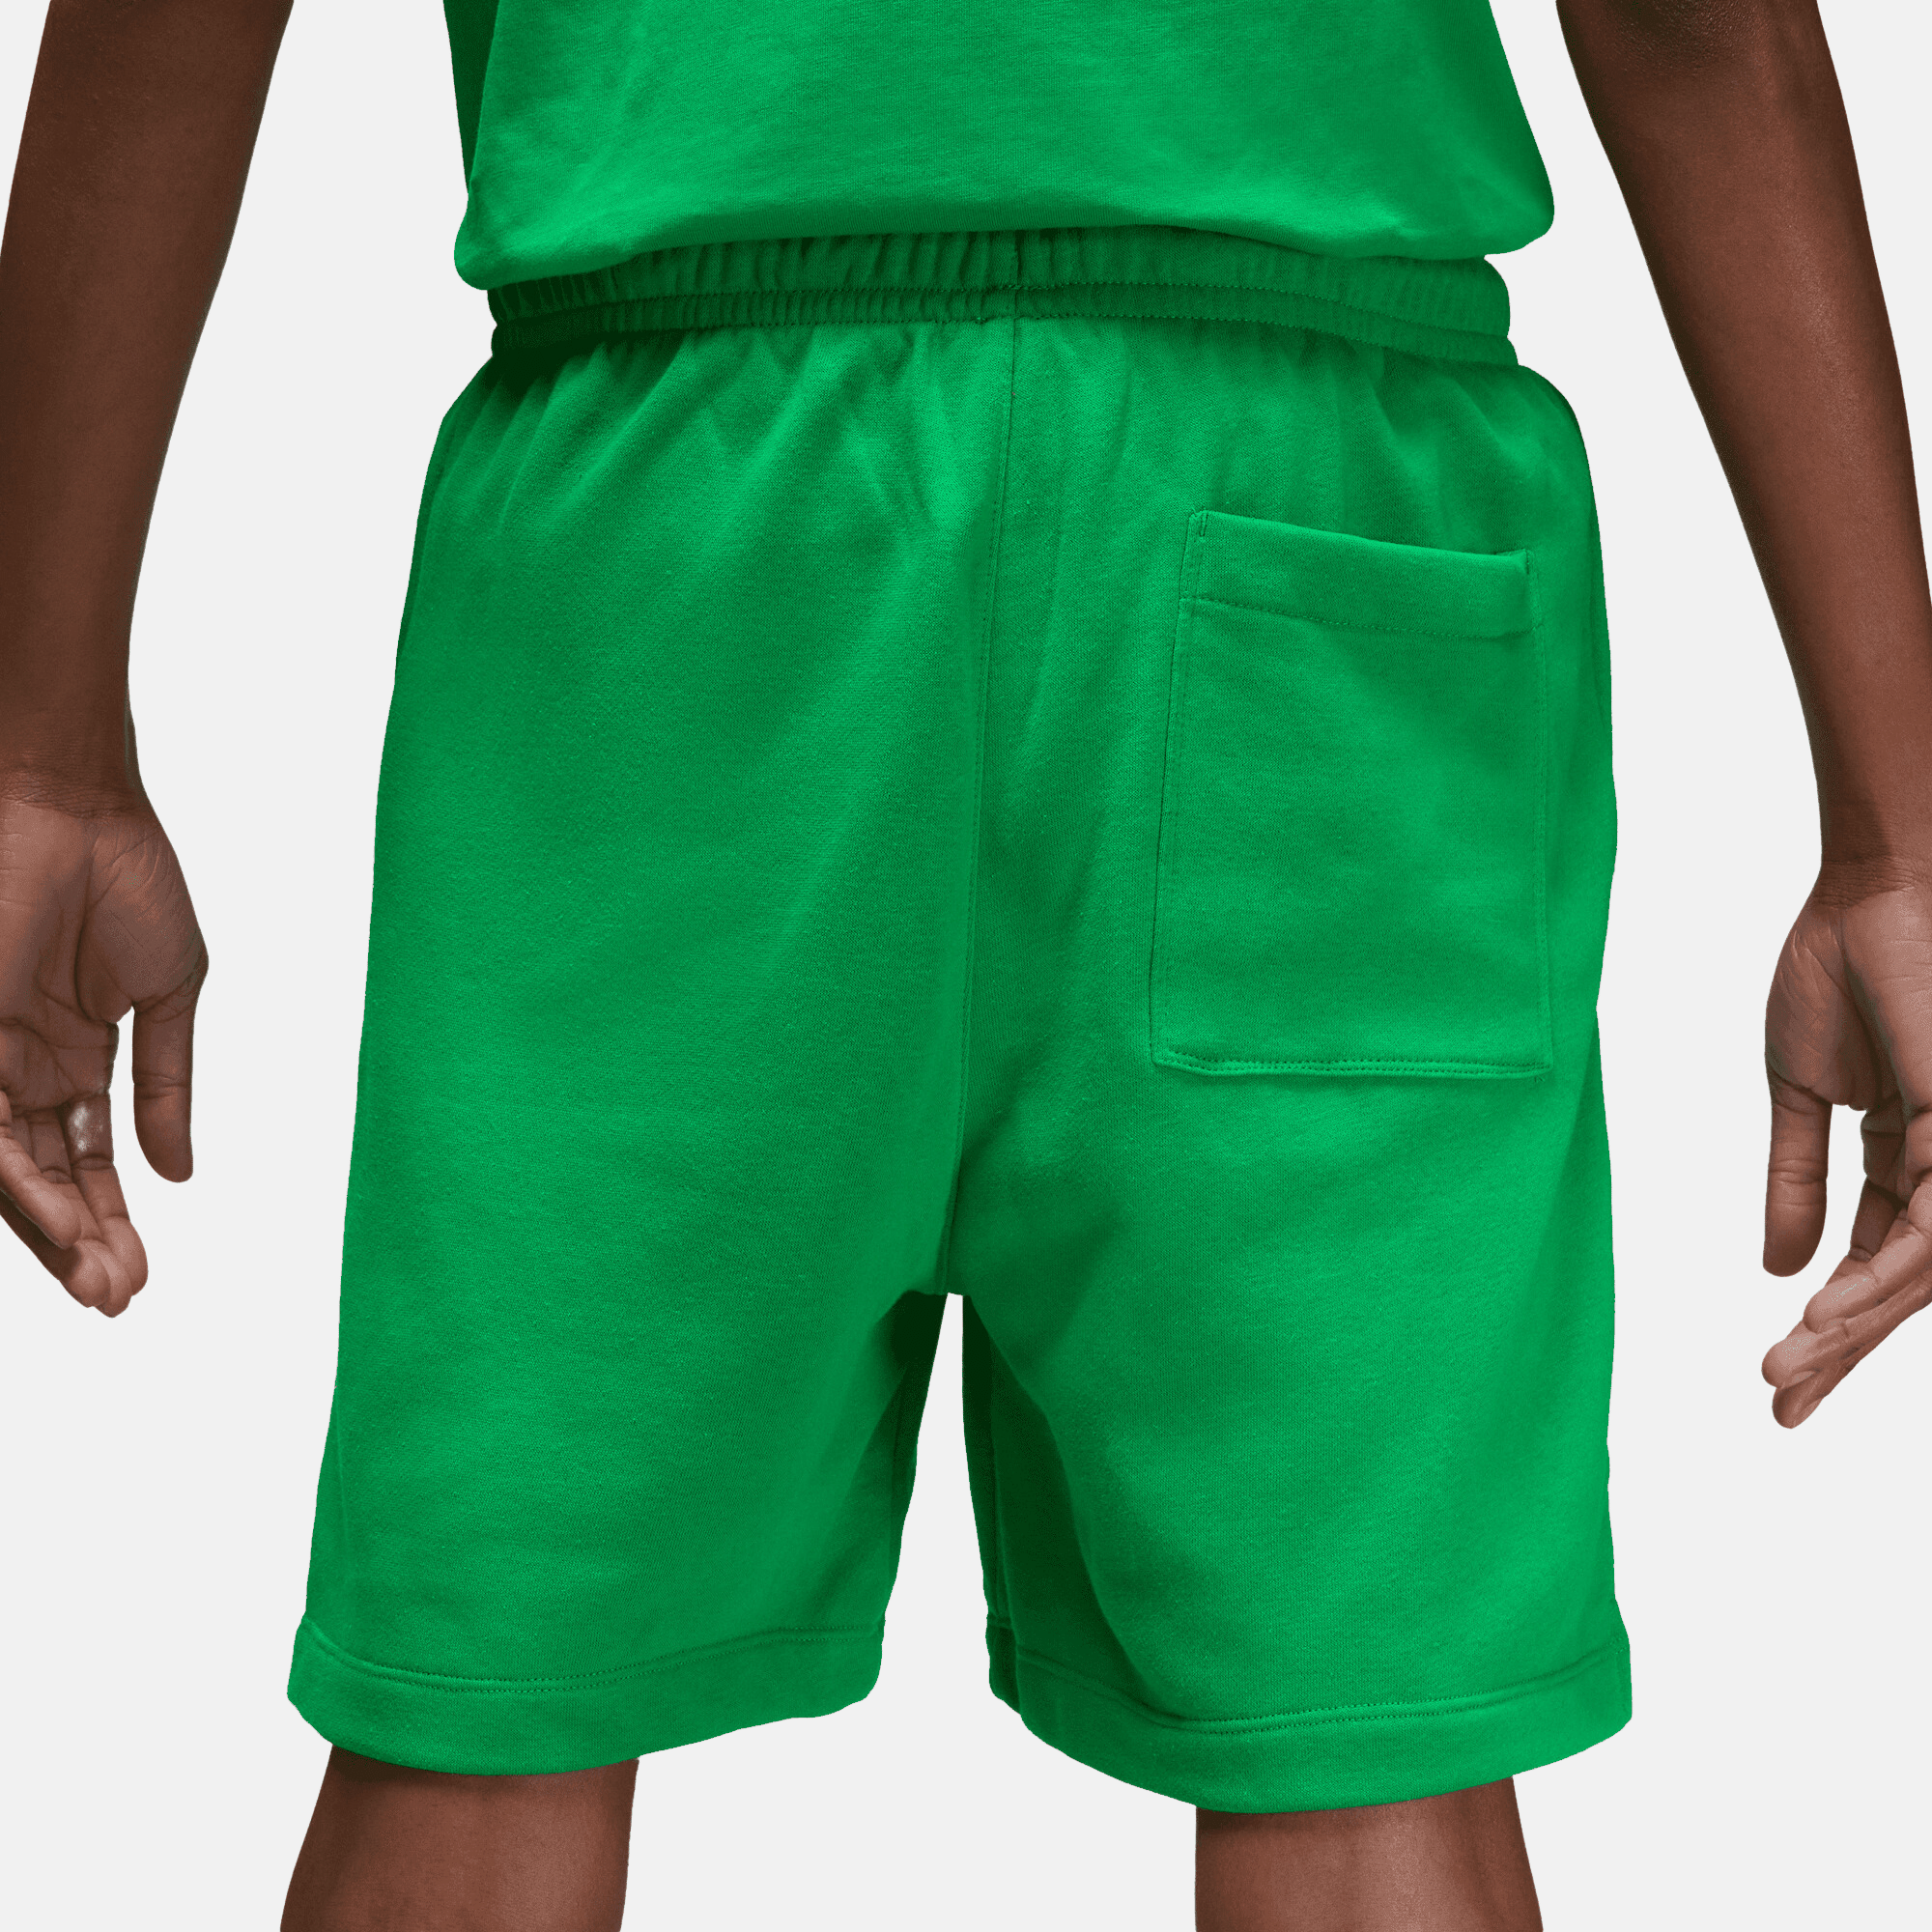 Nike Premium 6-inch Purple Basketball Shorts - Puffer Reds